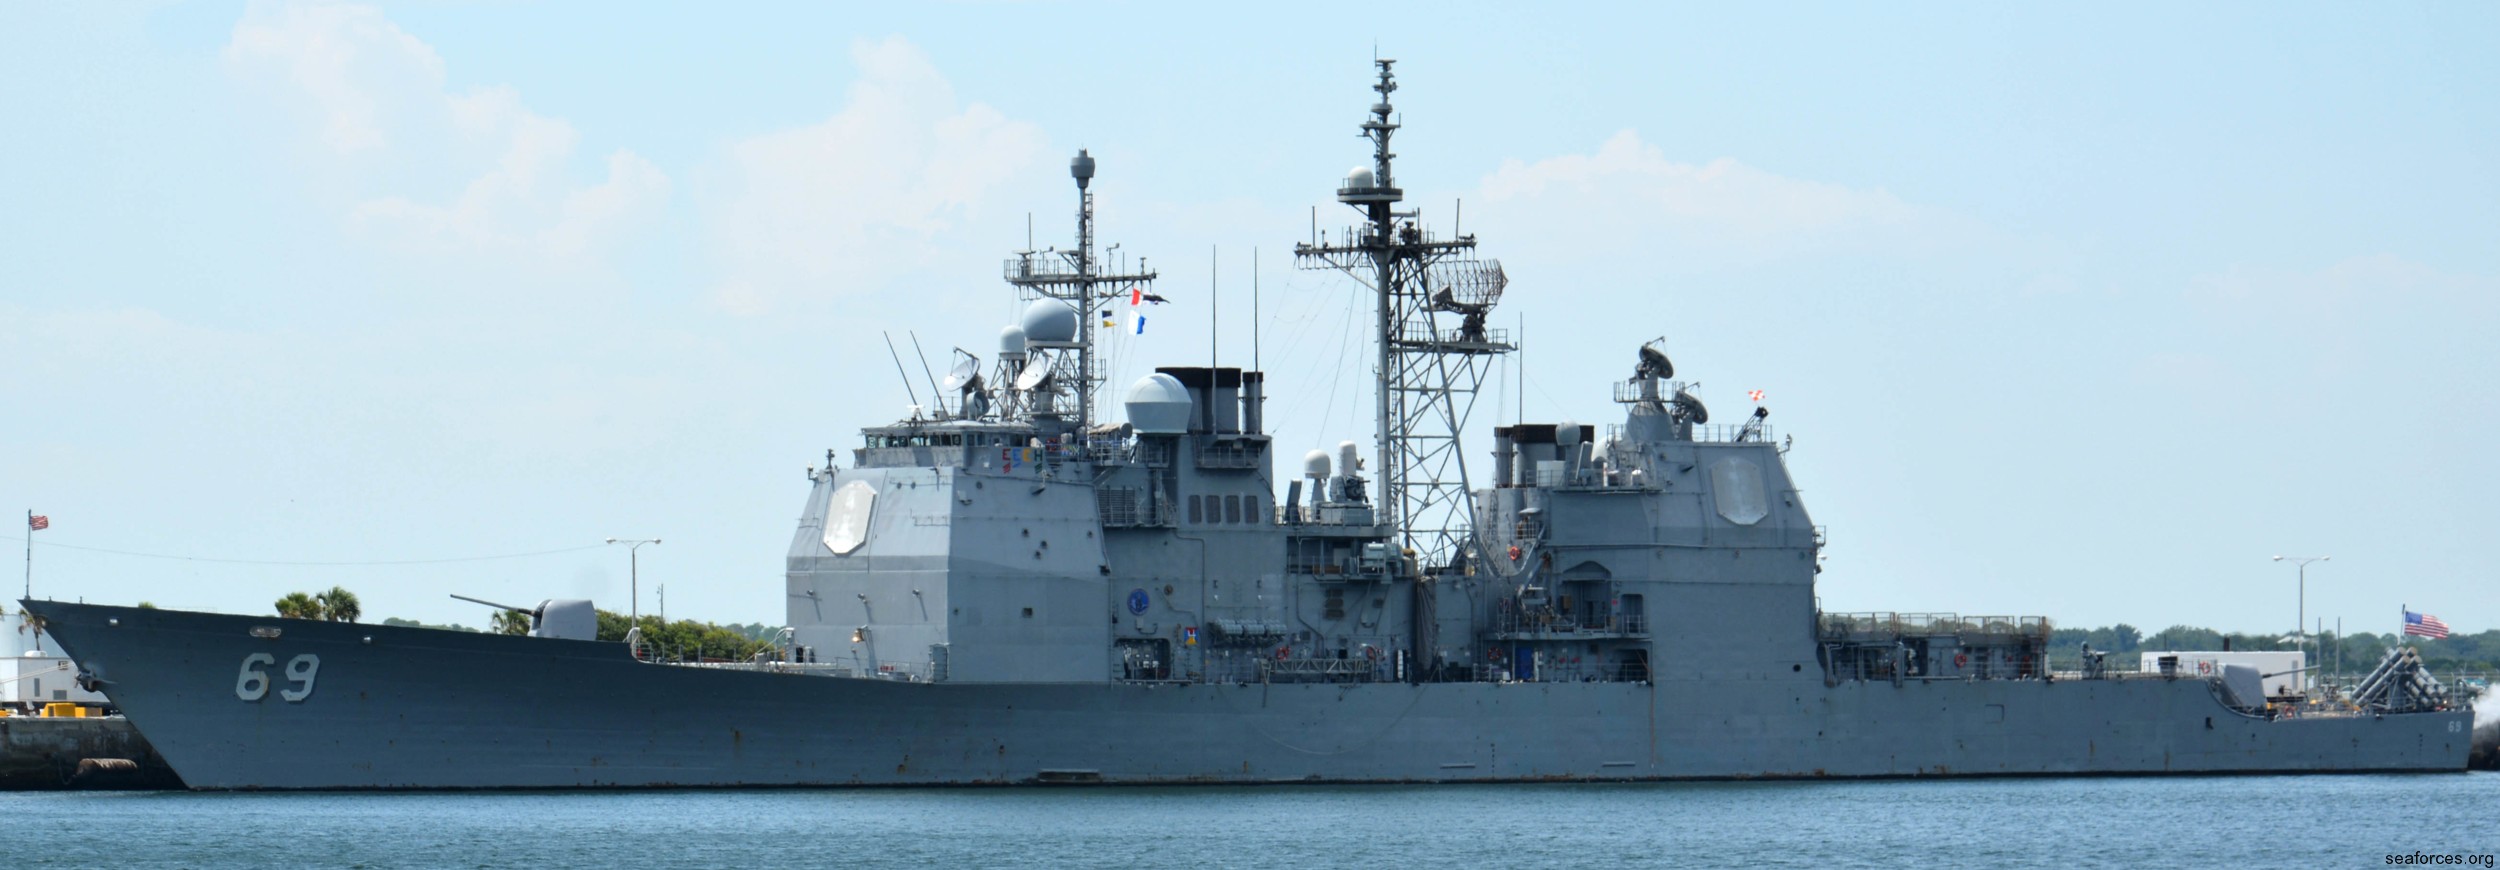 cg-69 uss vicksburg ticonderoga class guided missile cruiser us navy 45 naval station mayport florida